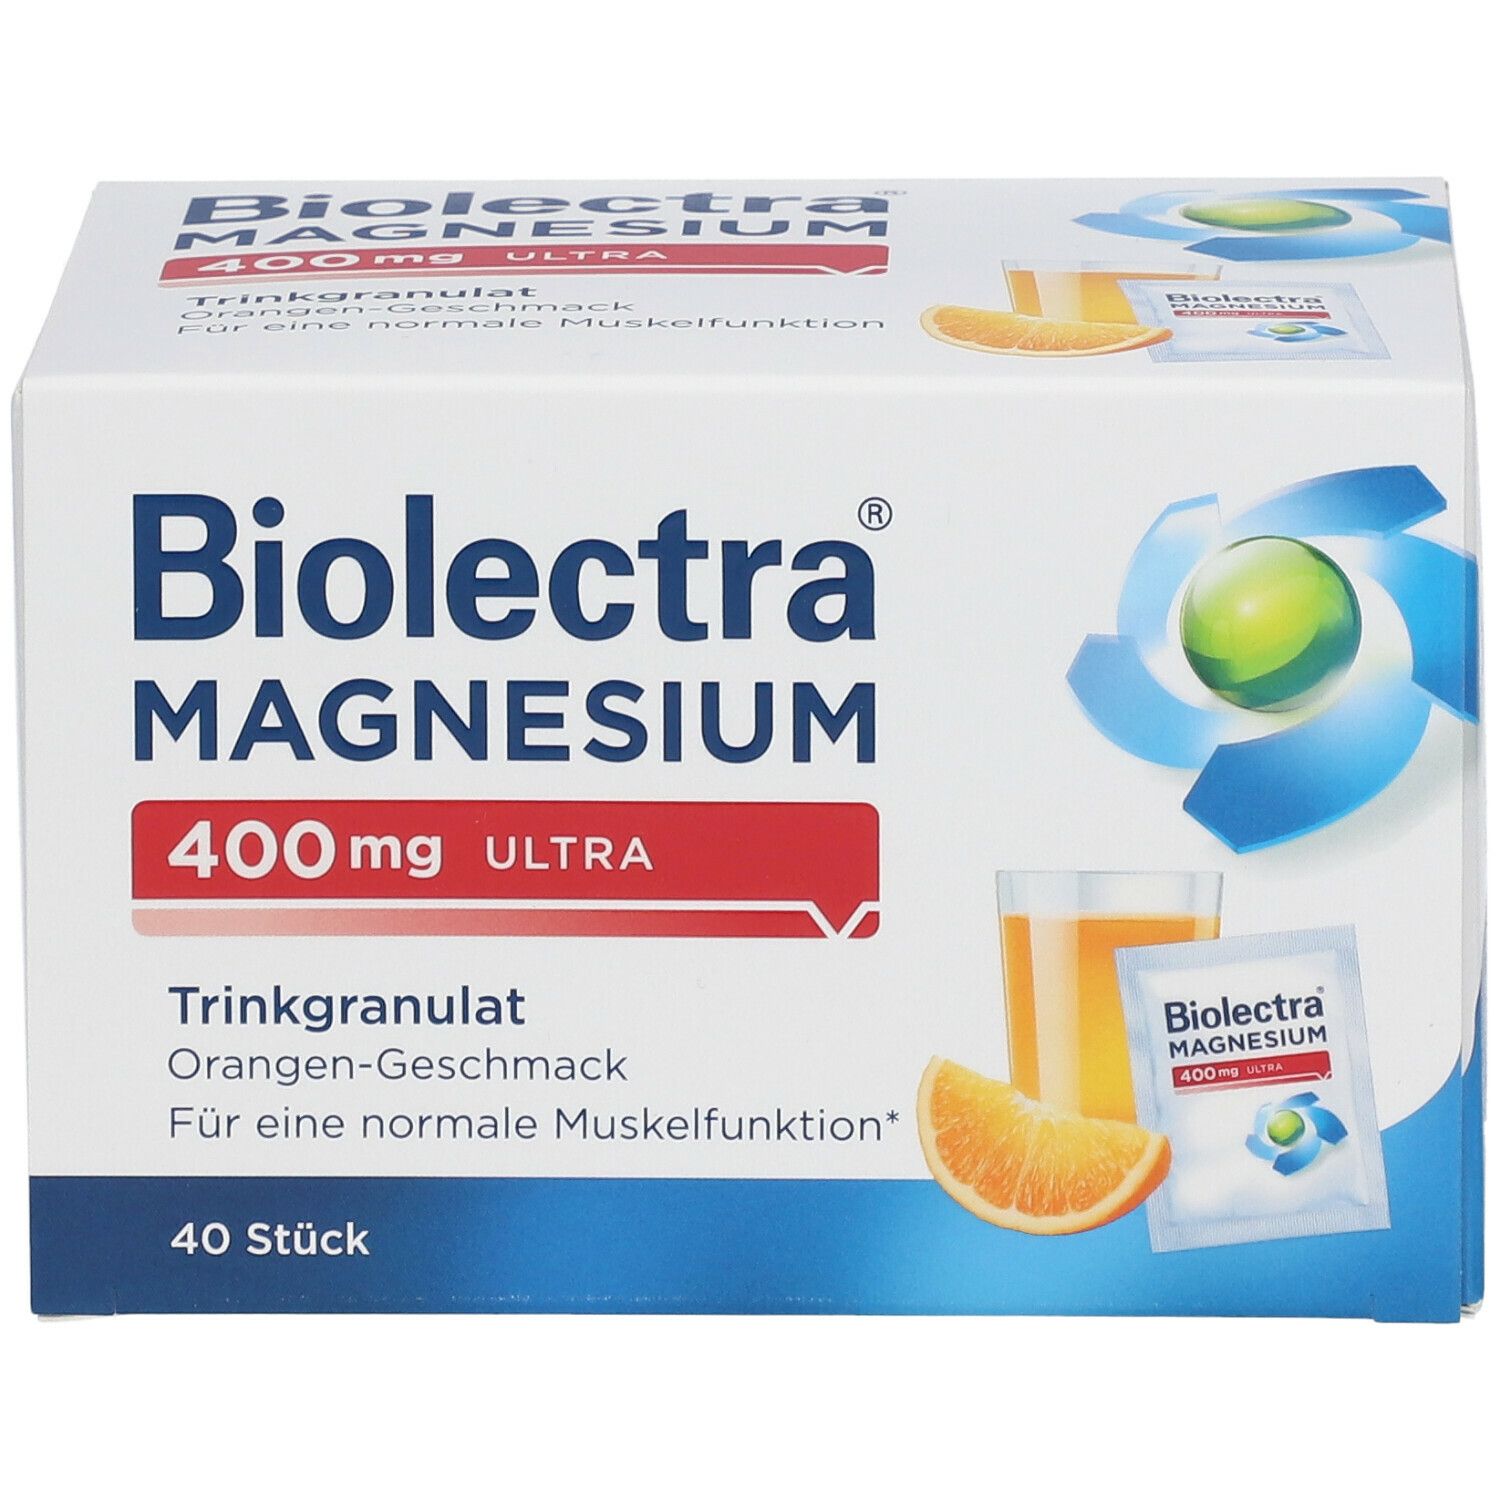 Biolectra® Magnesium 400 mg ultra Trinkgranulat Orange